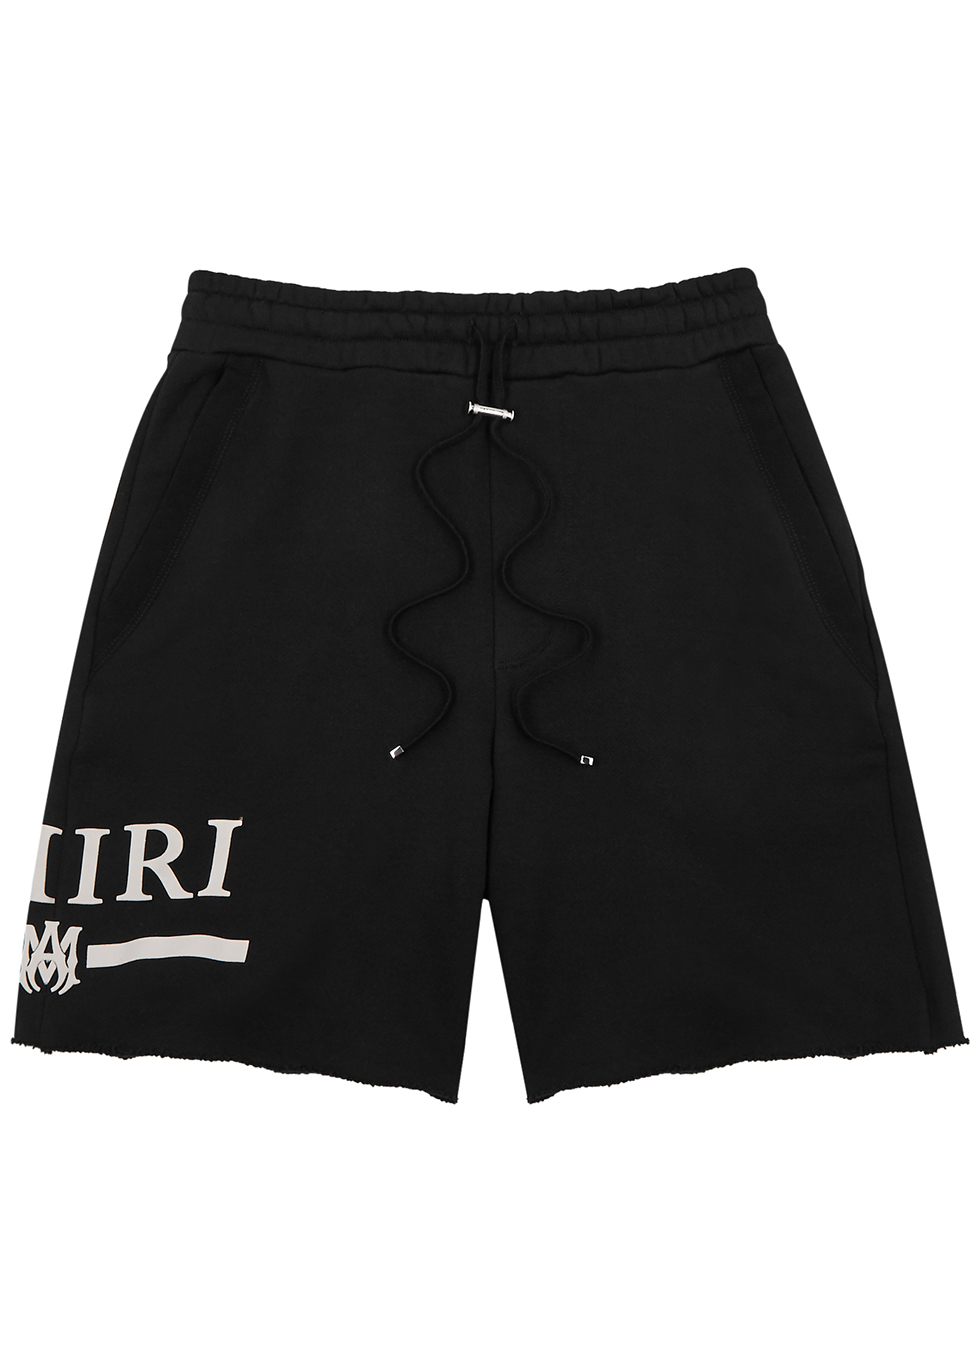 Bar black cotton shorts